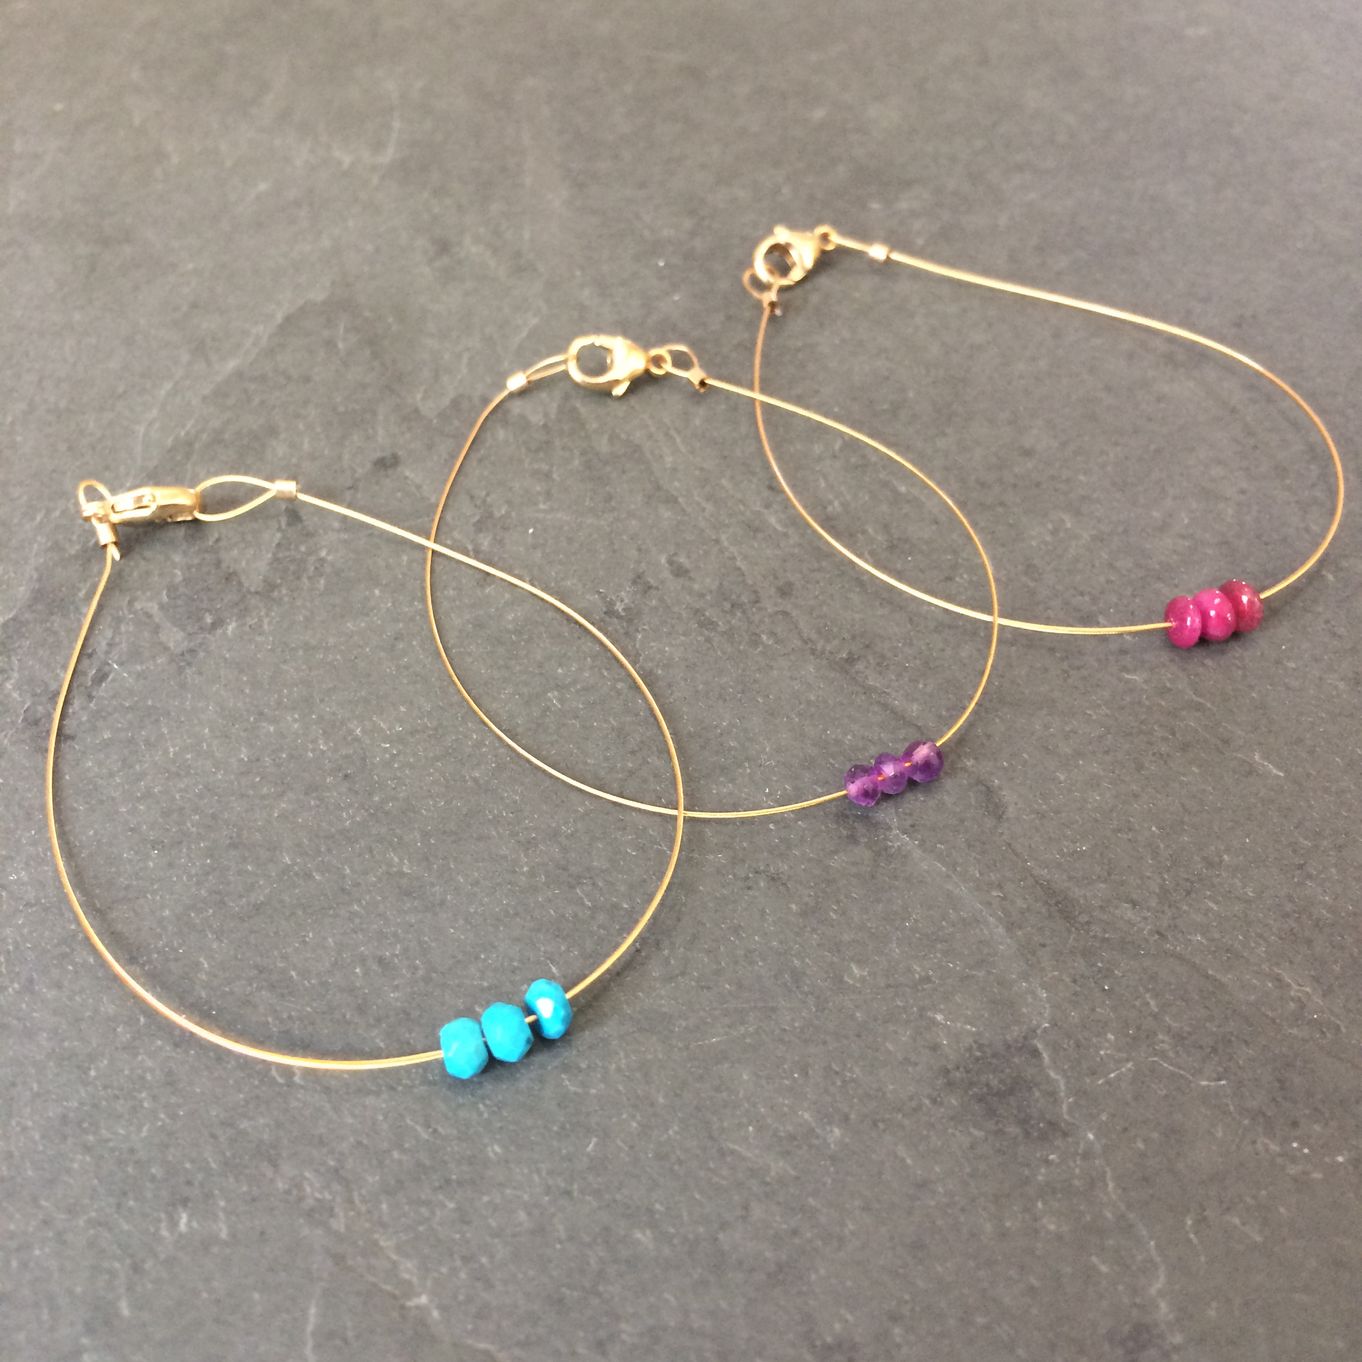 4 DIY Thread Bracelet Ideas, How To Make Bracelets, DIY Jewelry Making